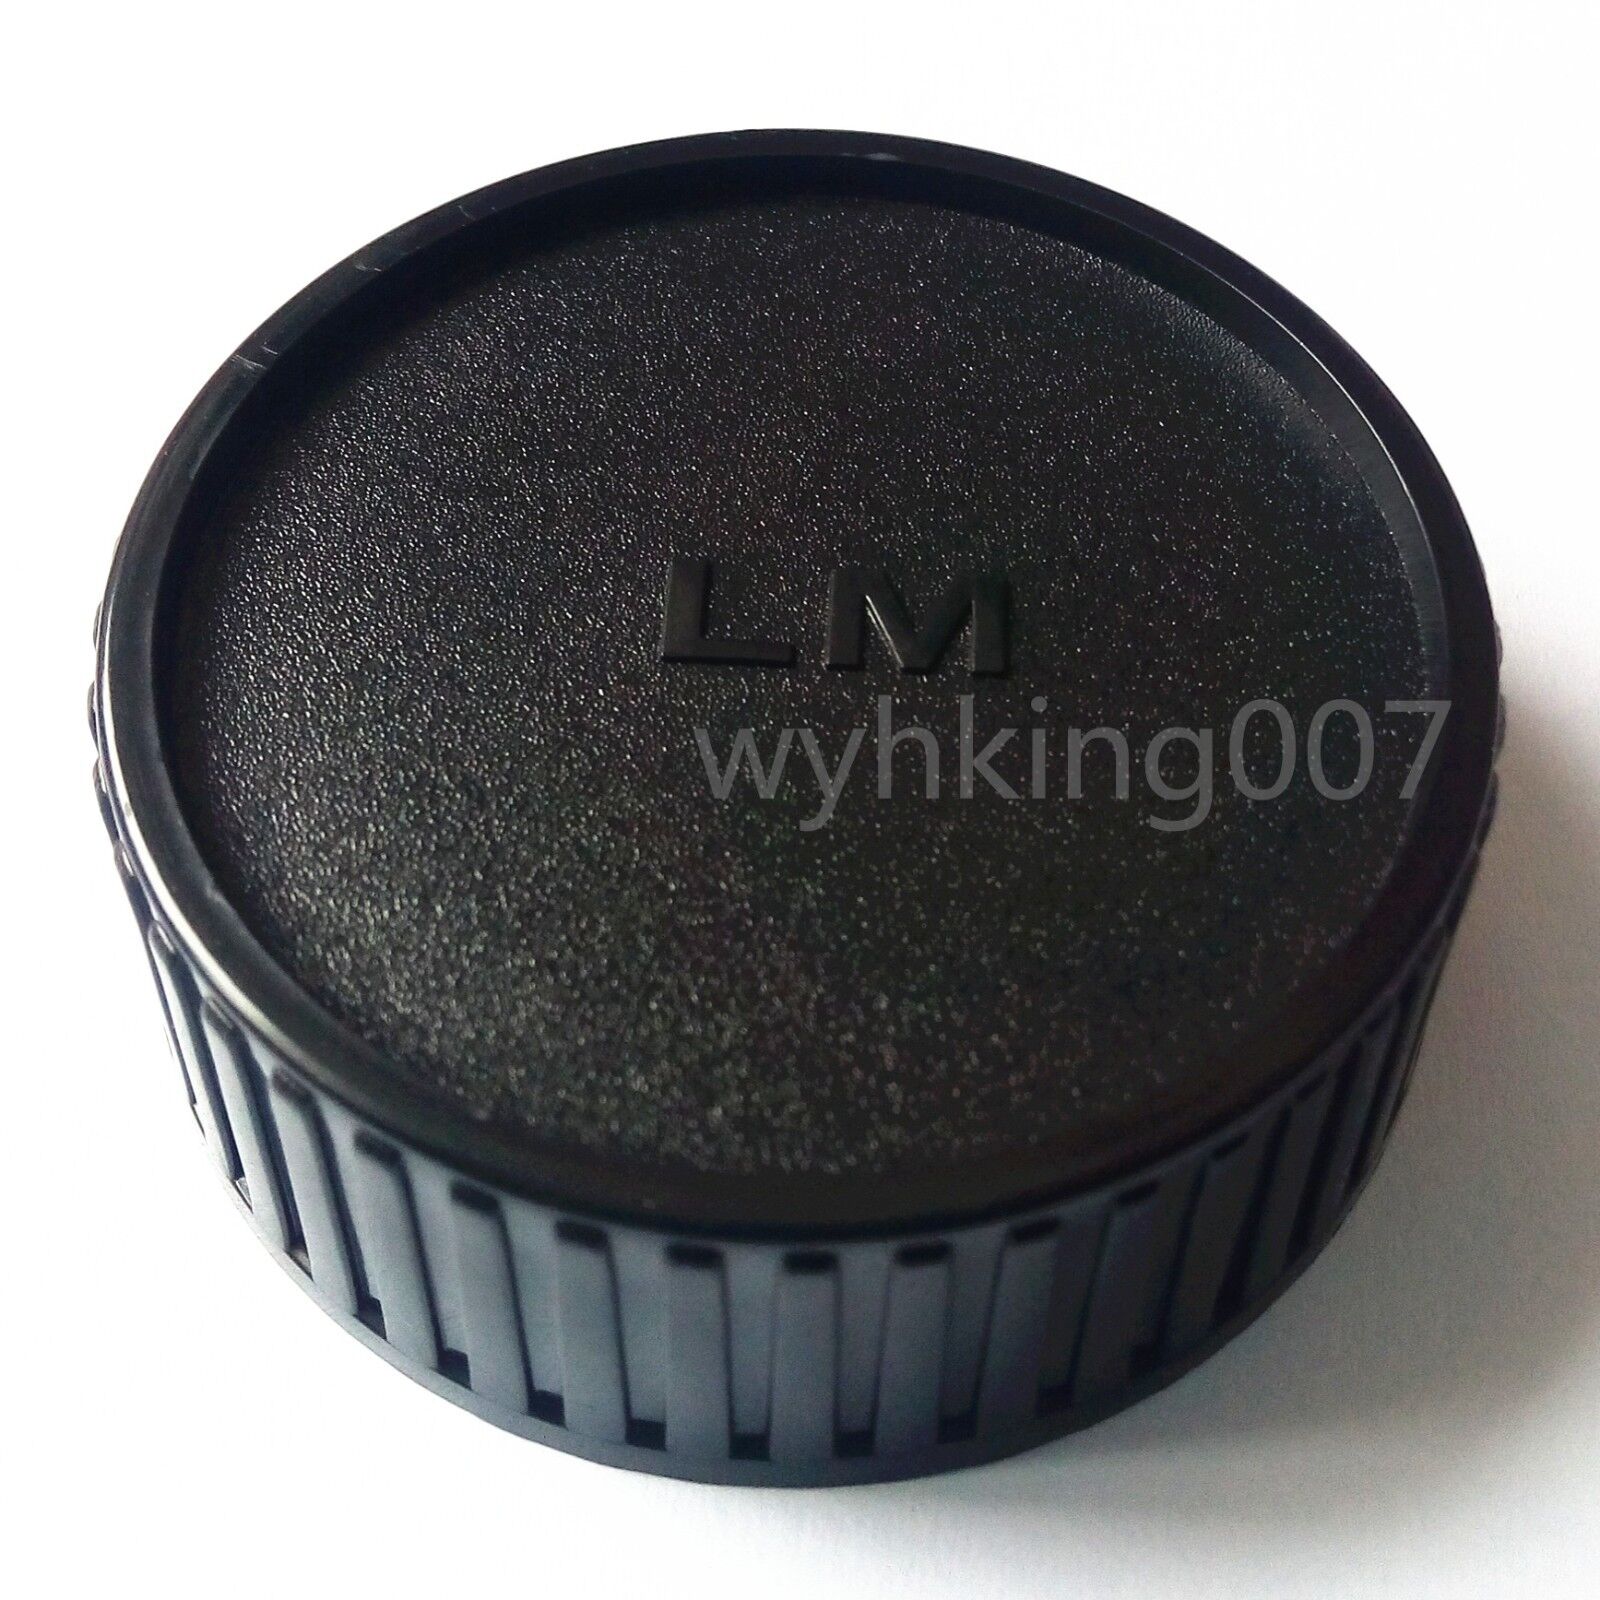 10PCS Rear Lens Cap Caps Cover For Leica M LM Mount M2 M3 M4 M5 M6 M7 M8 M9 MP Unbranded/Generic Does not apply - фотография #2